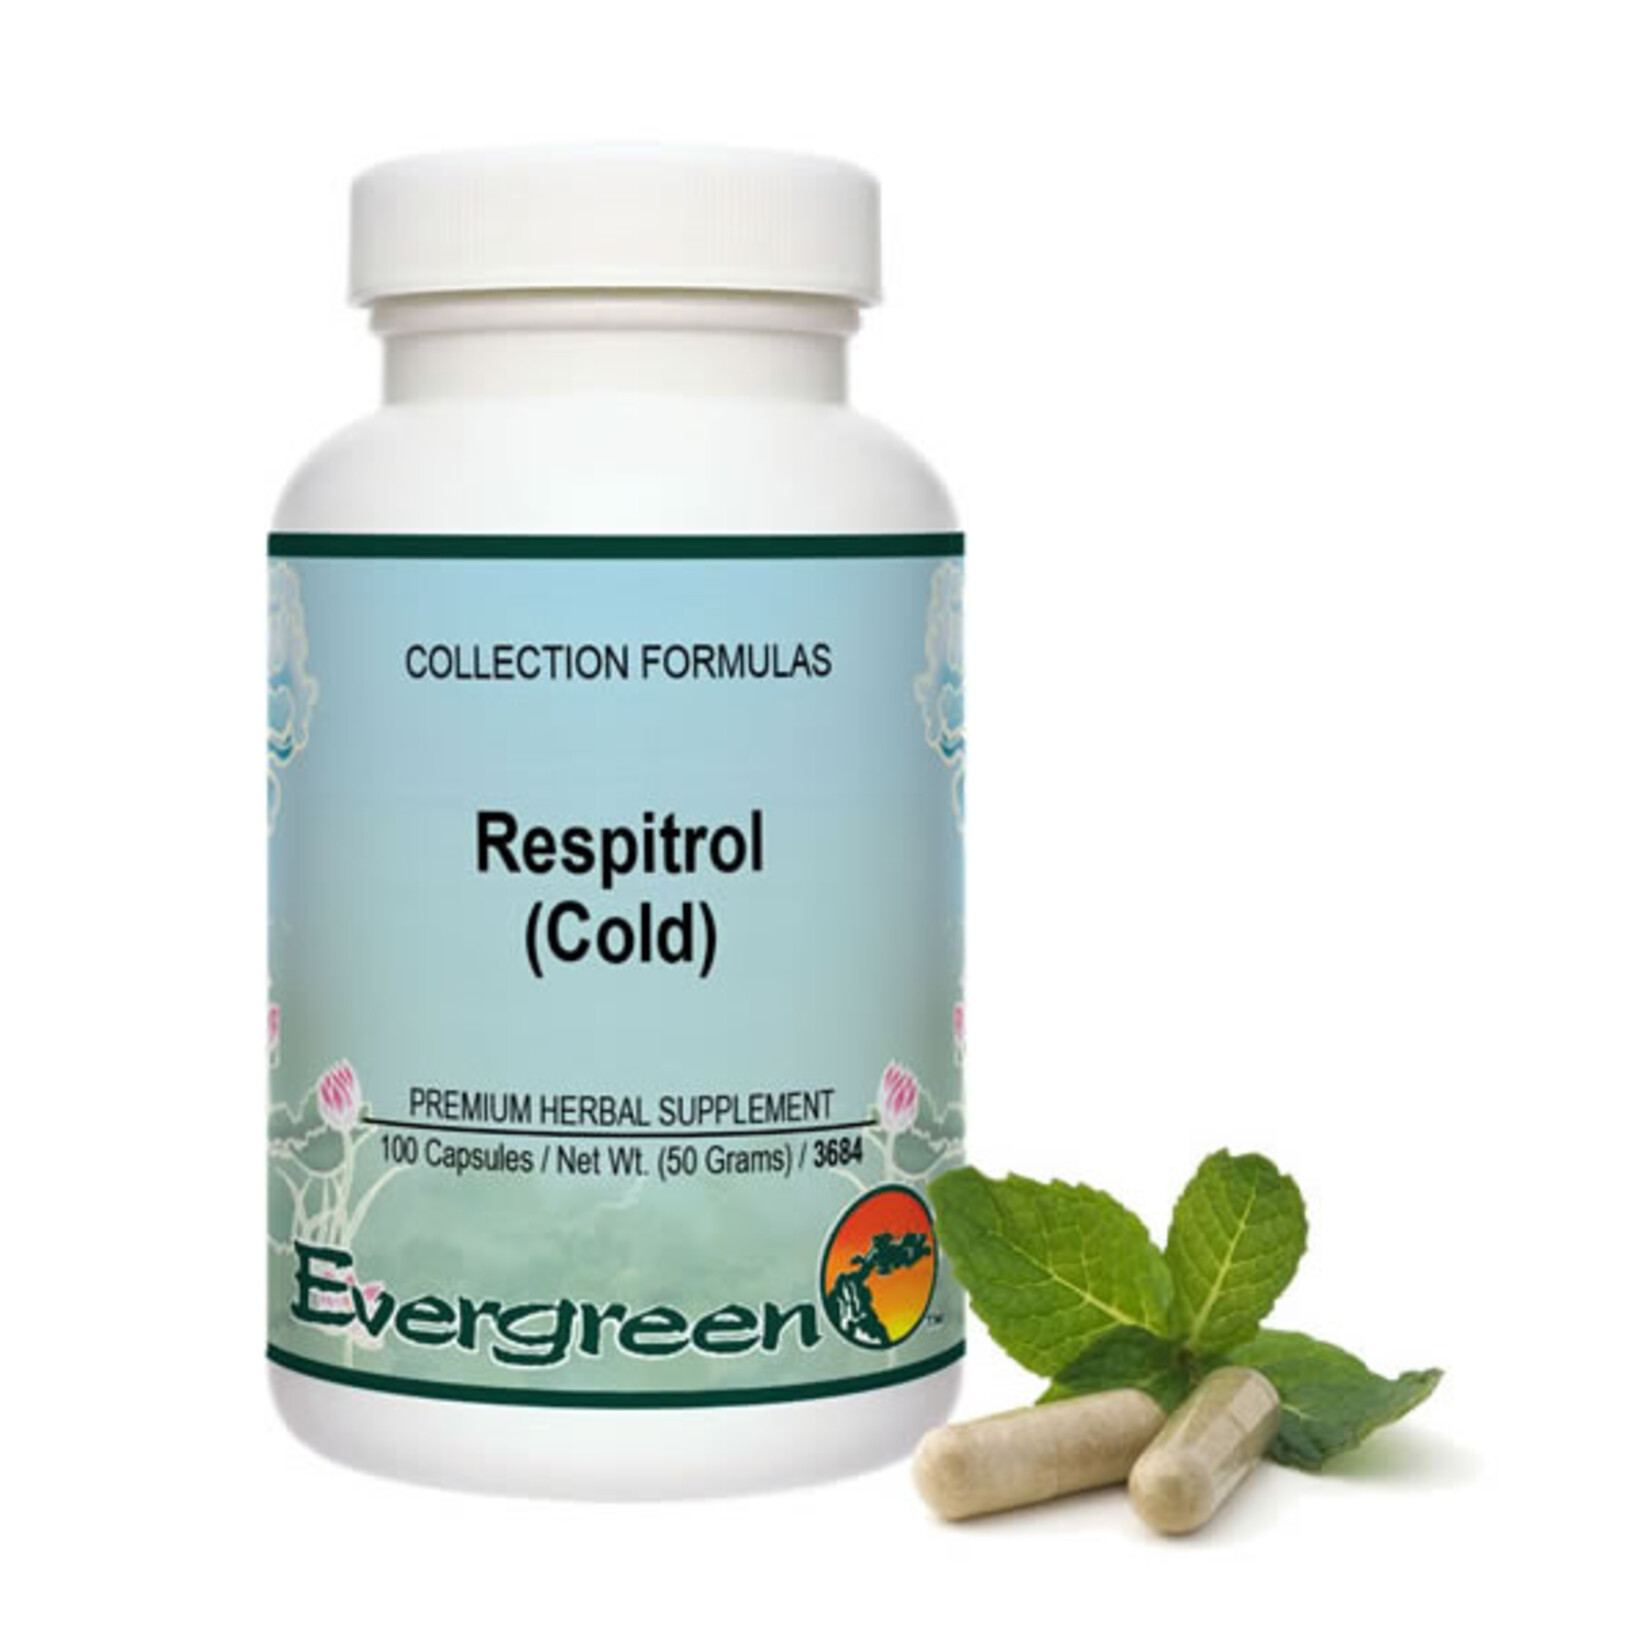 Respitrol (Cold) (Evergreen Herbs)